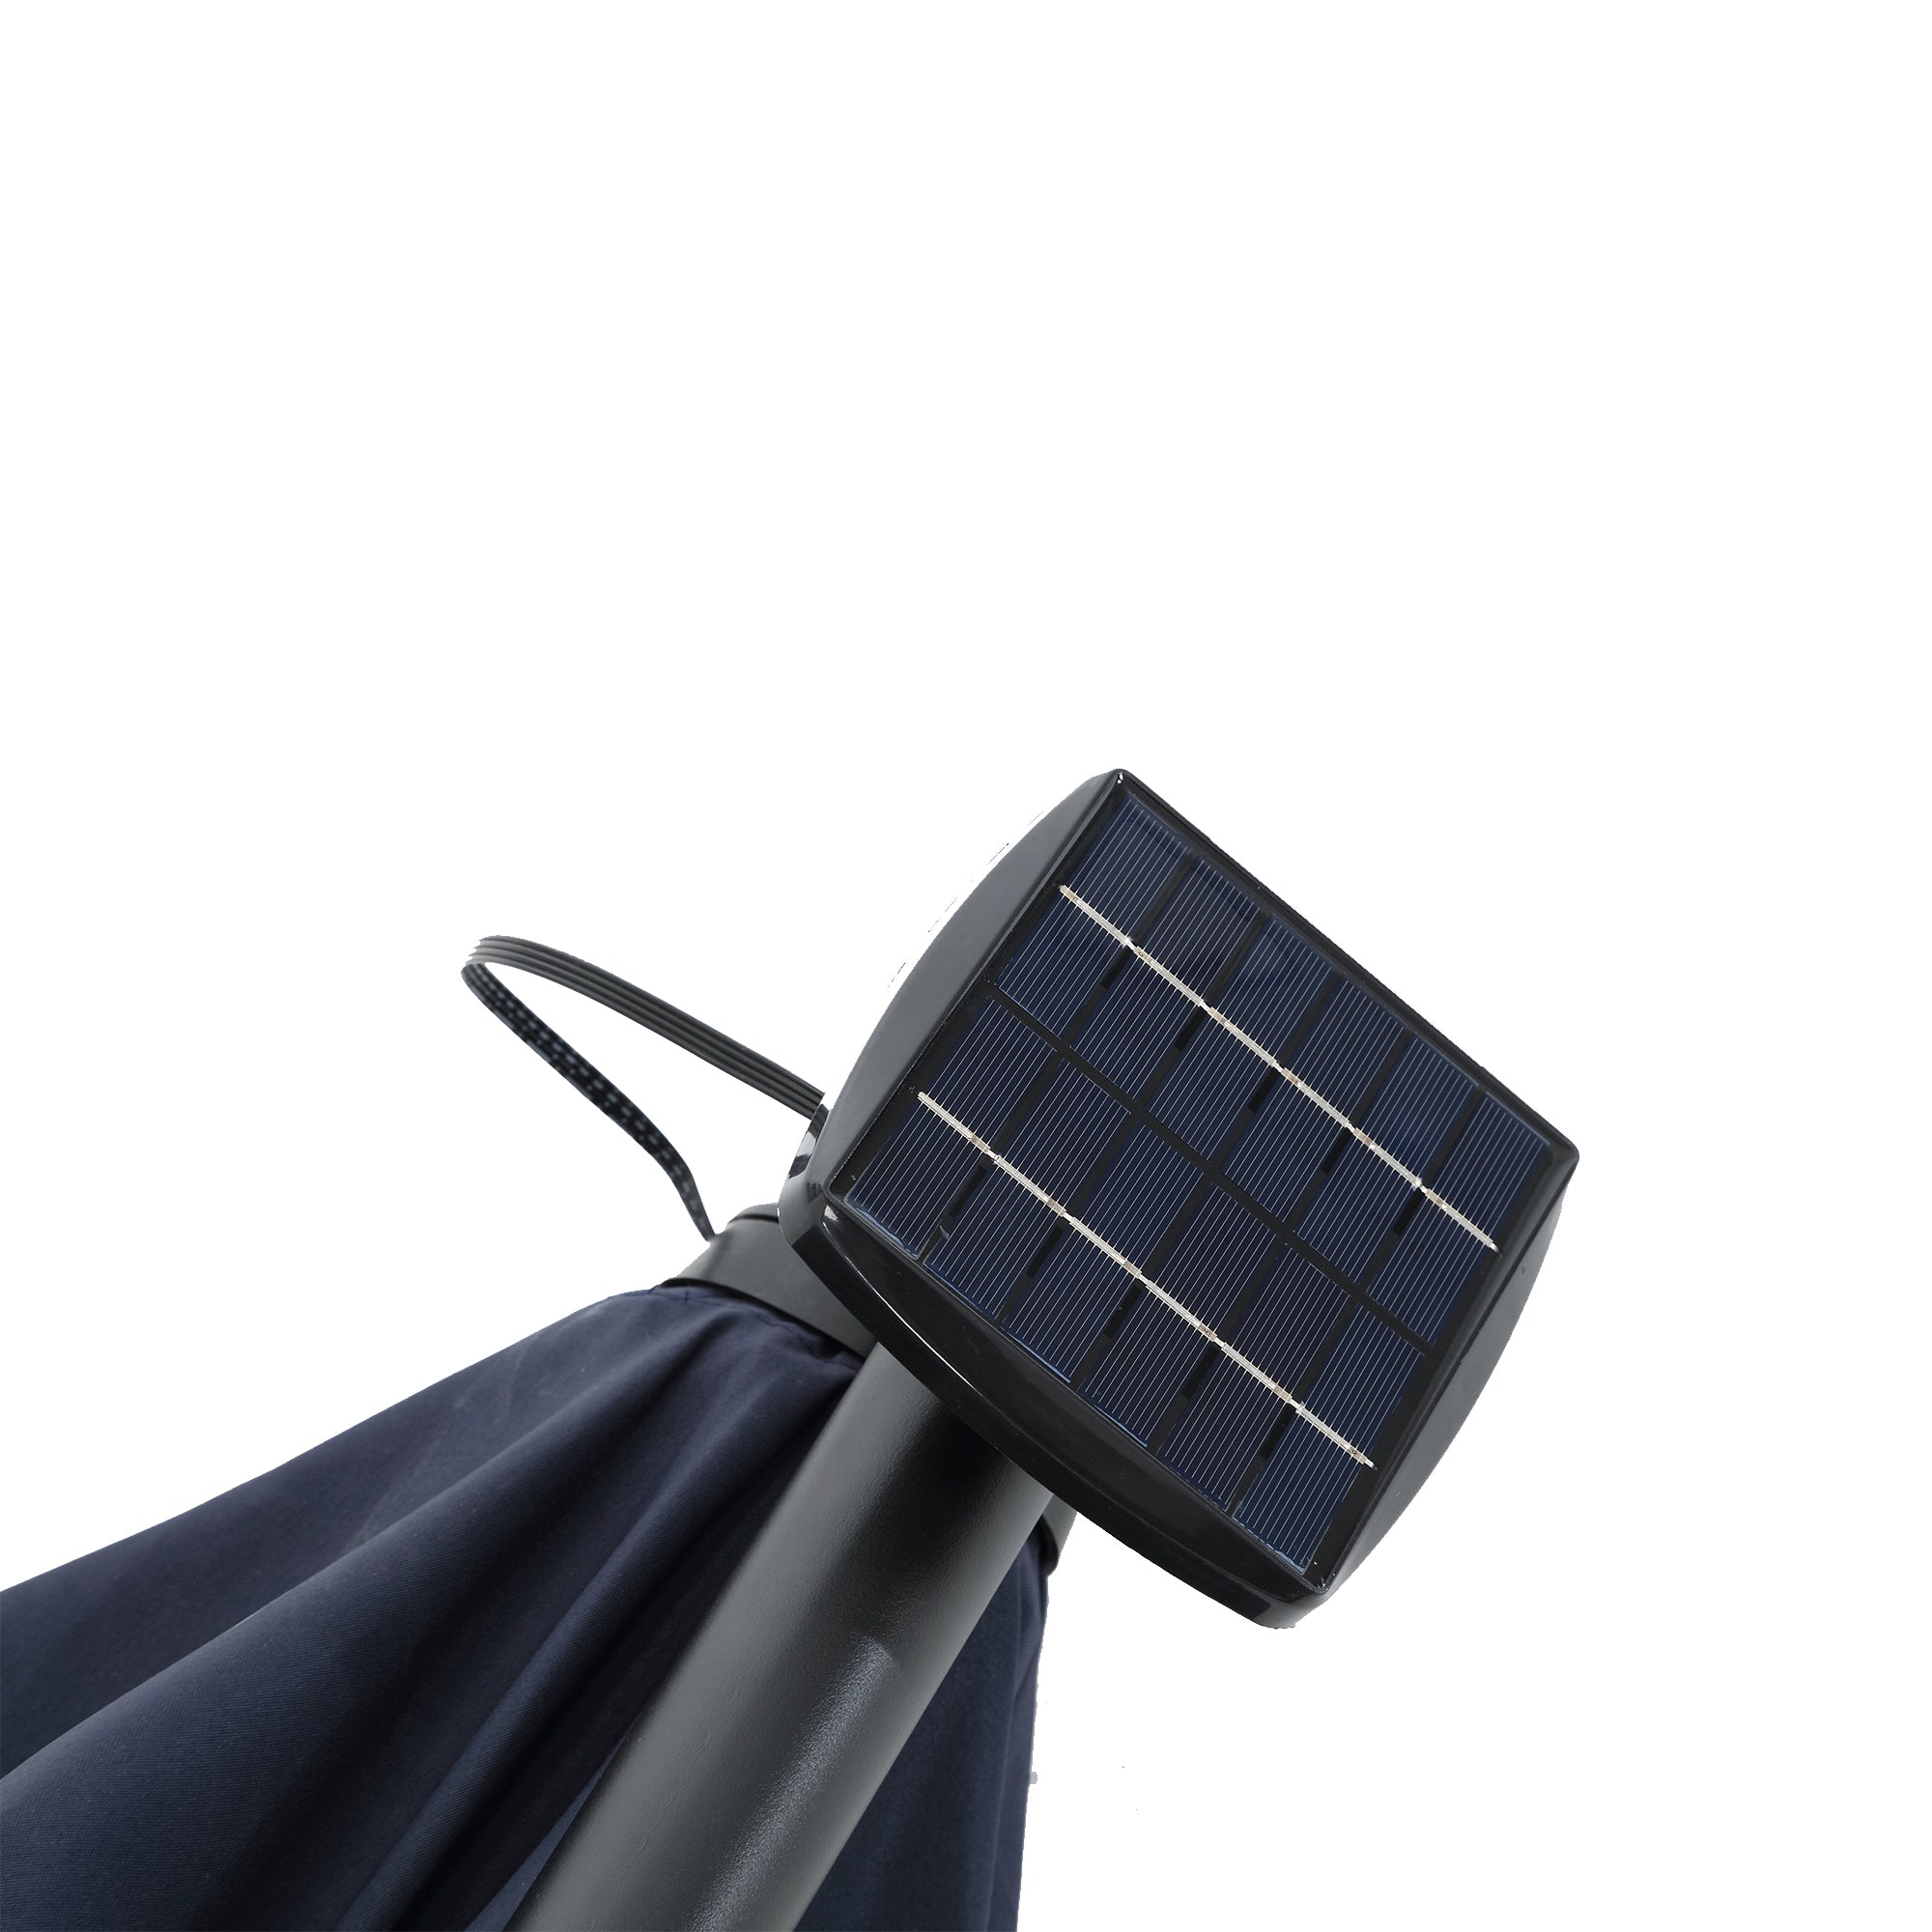 10 ft. Offset Hanging Outdoor Market Umbrella with Solar LED BOHFPU02NB